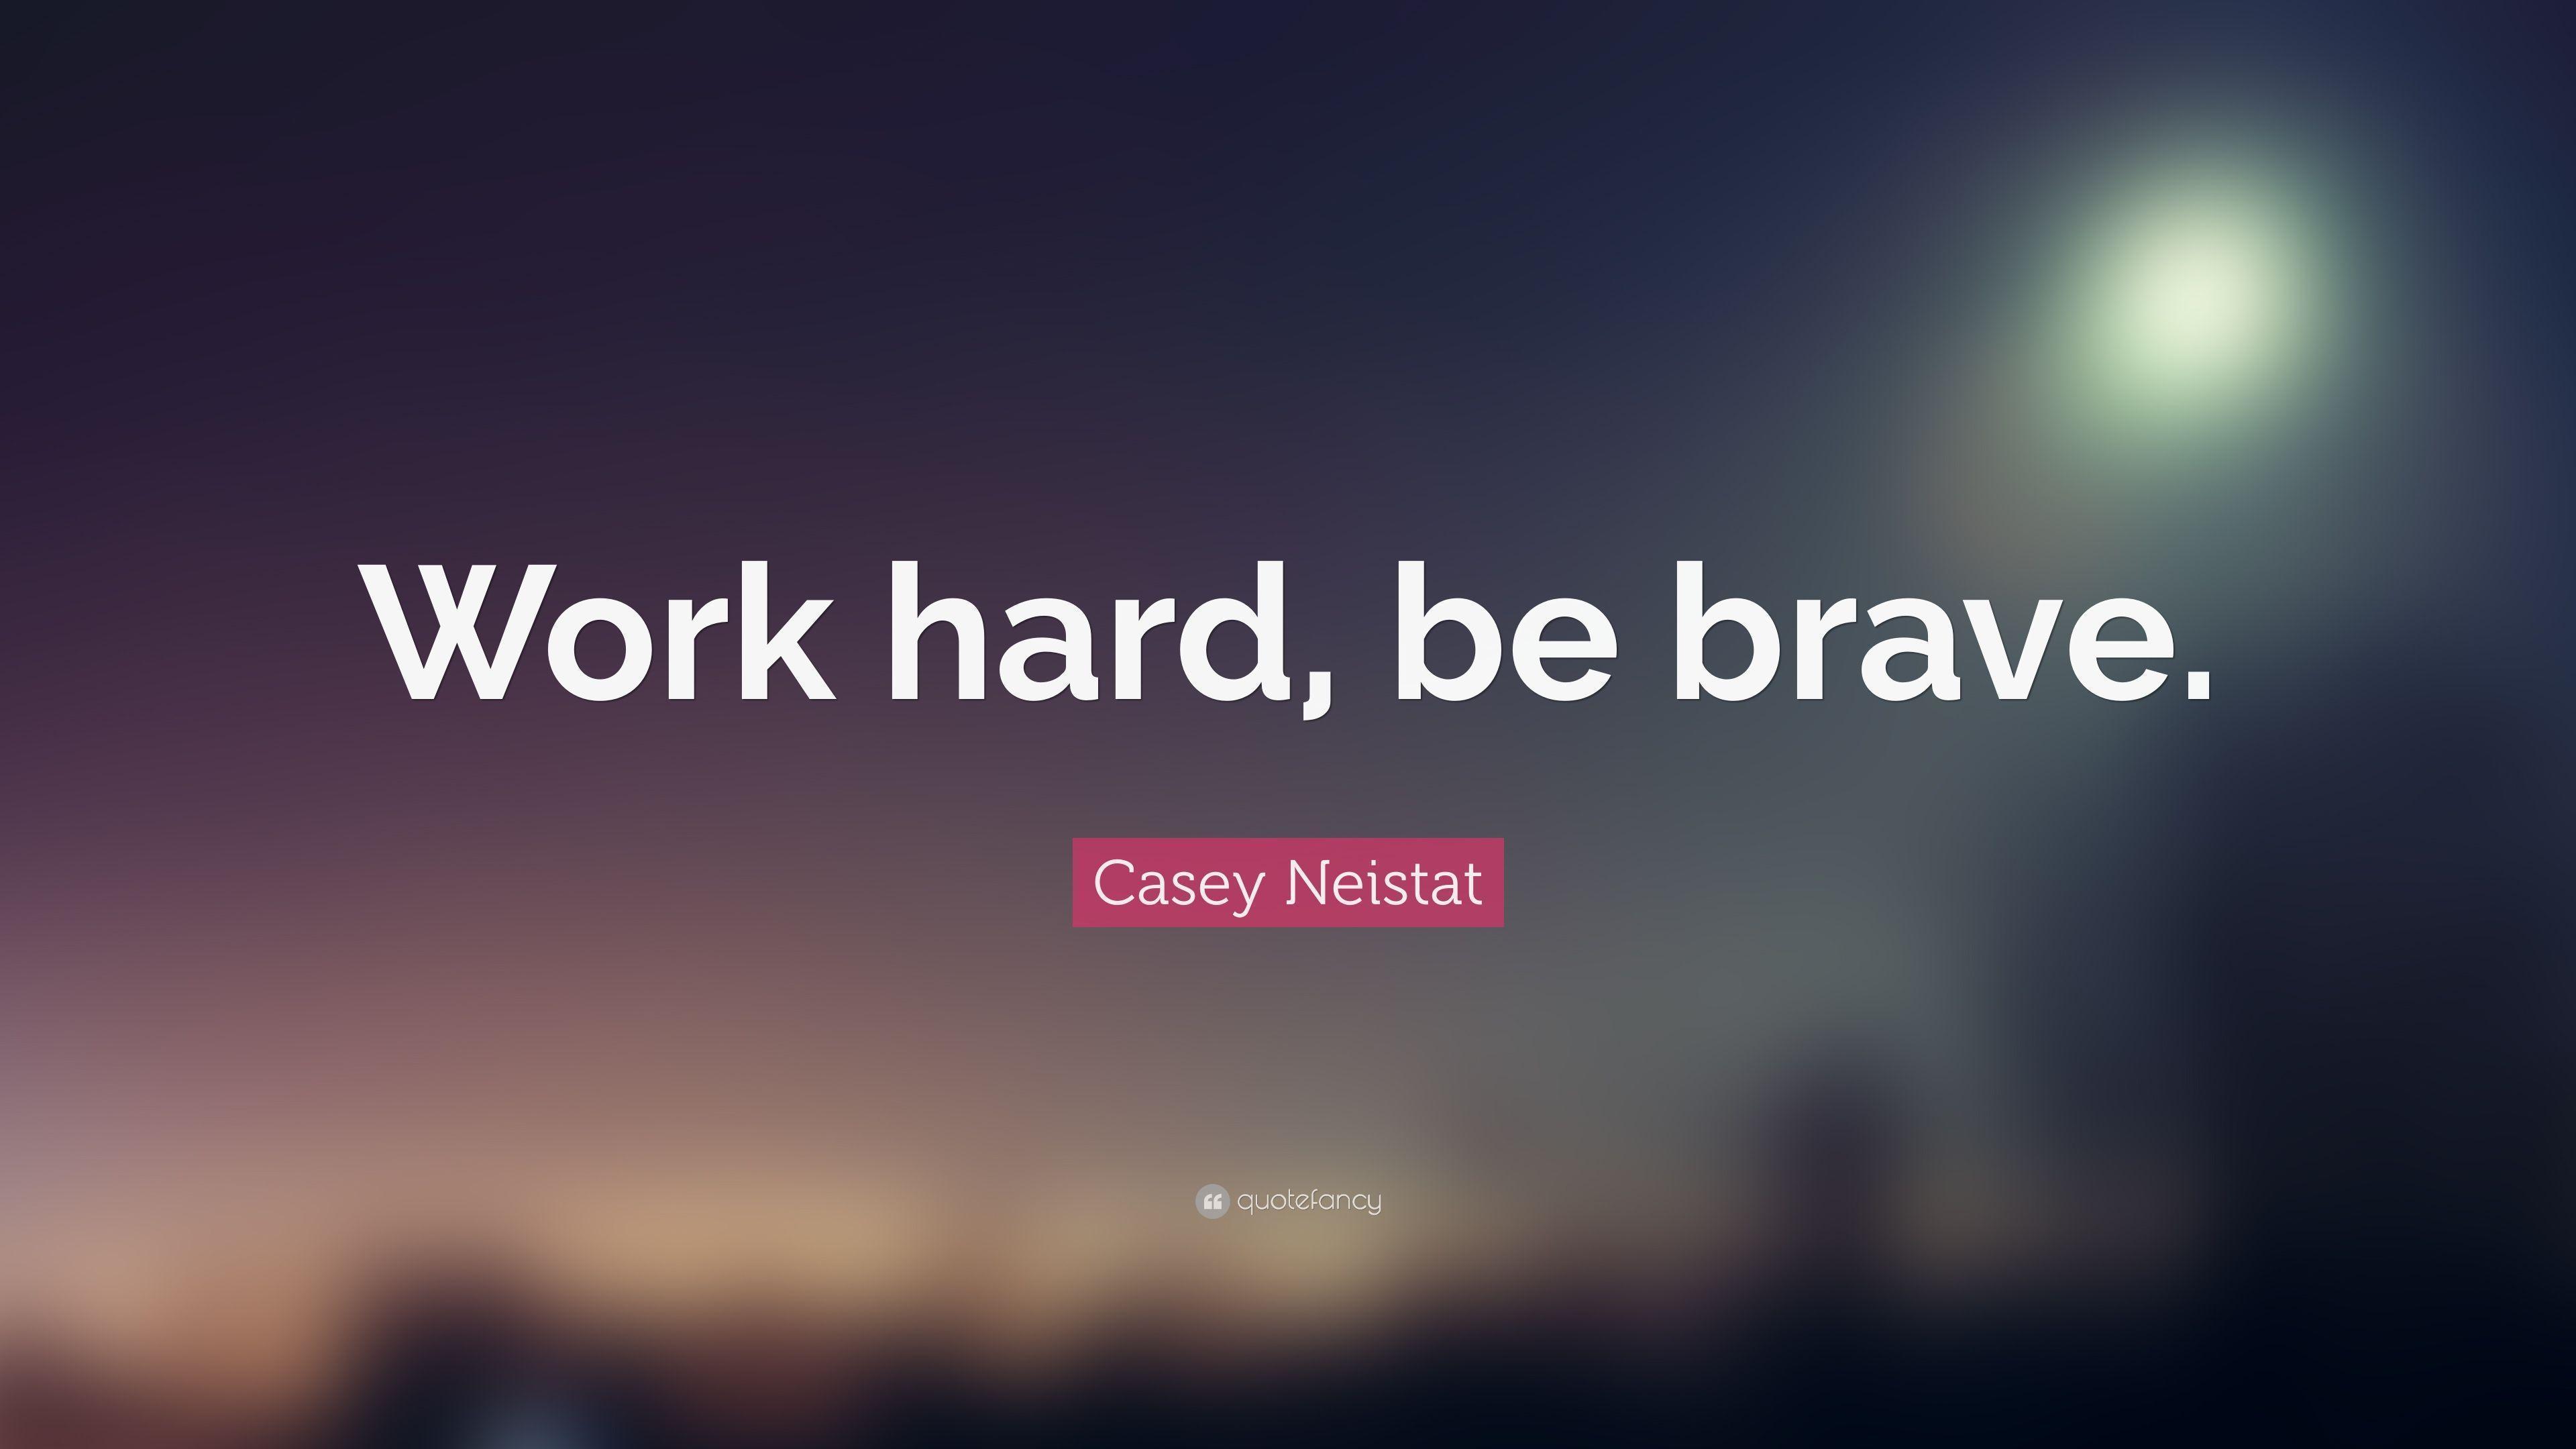 Casey Neistat Quote: “Work hard, be brave.” 22 wallpaper